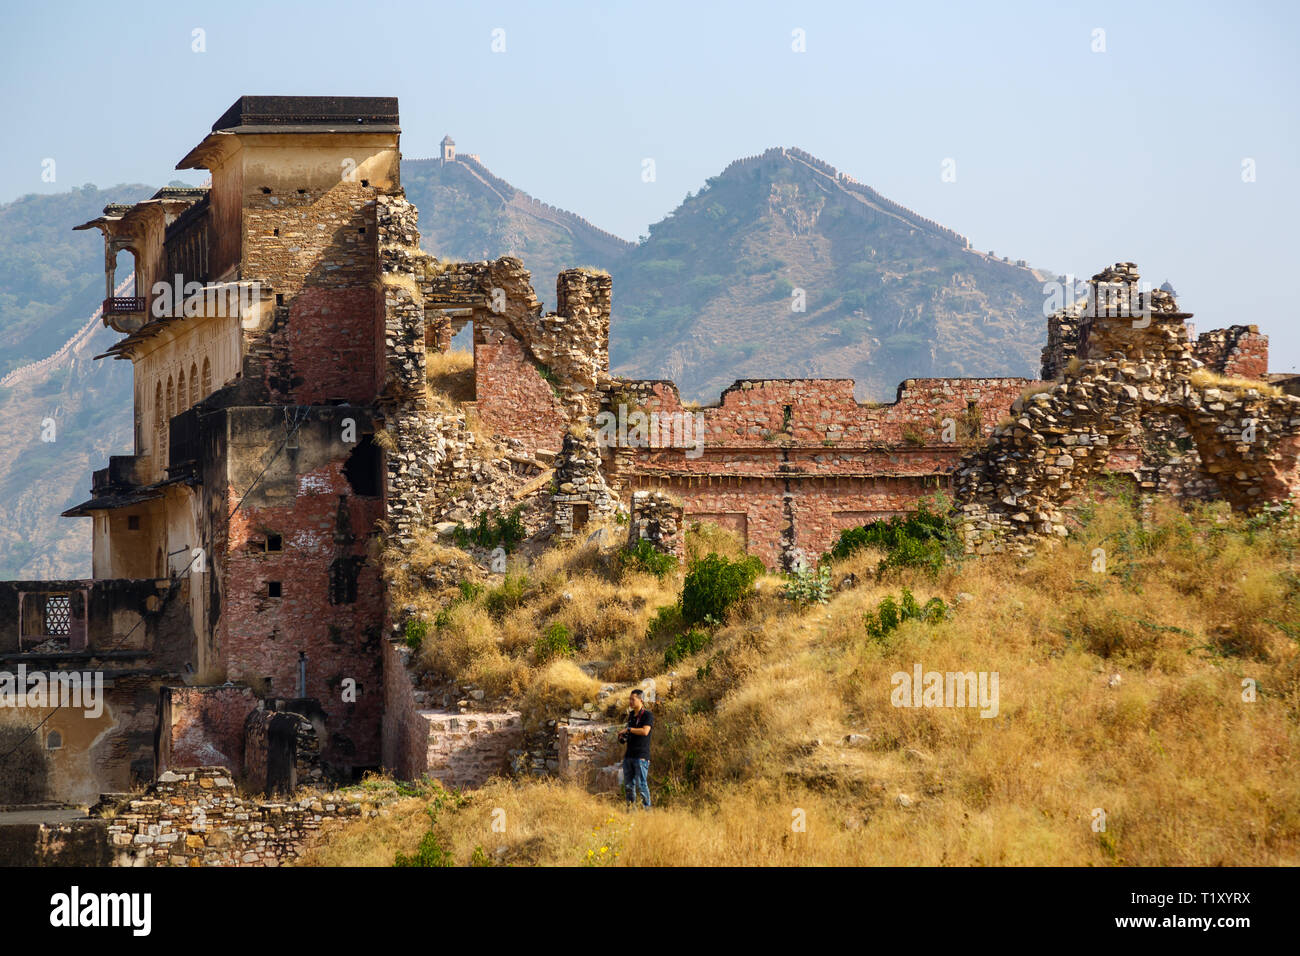 JAIPUR, India - 18 novembre 2012: Rovine di antichi edifici architettonici di Jaipur, Rajasthan Foto Stock